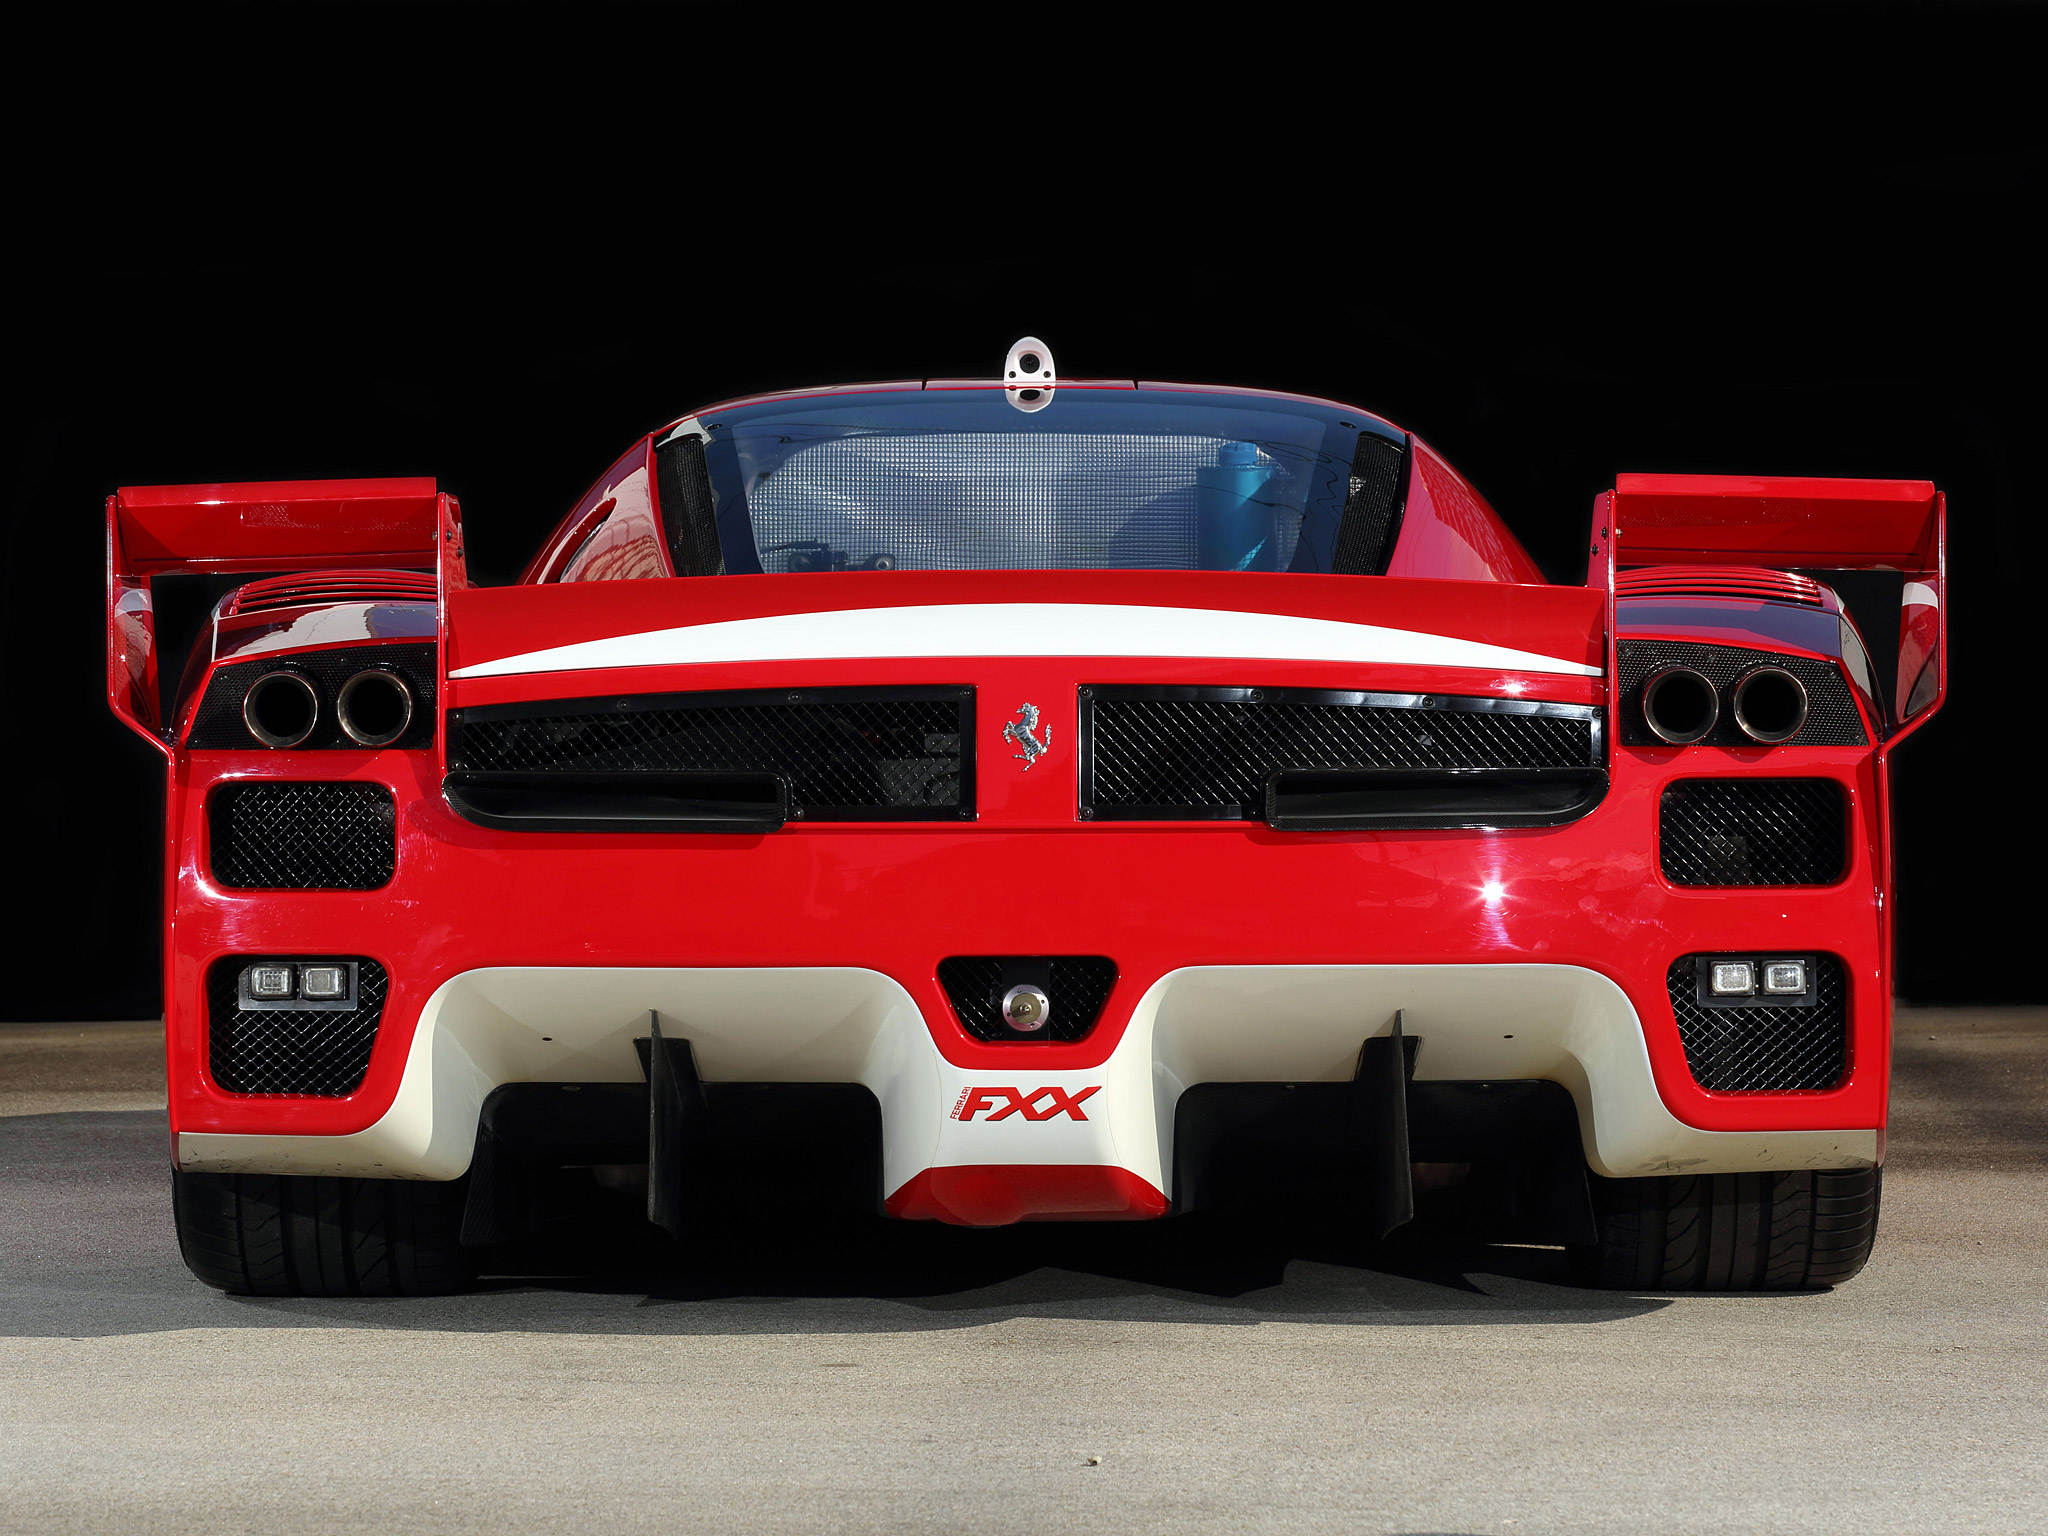  2007 Ferrari FXX Evoluzione Wallpaper.